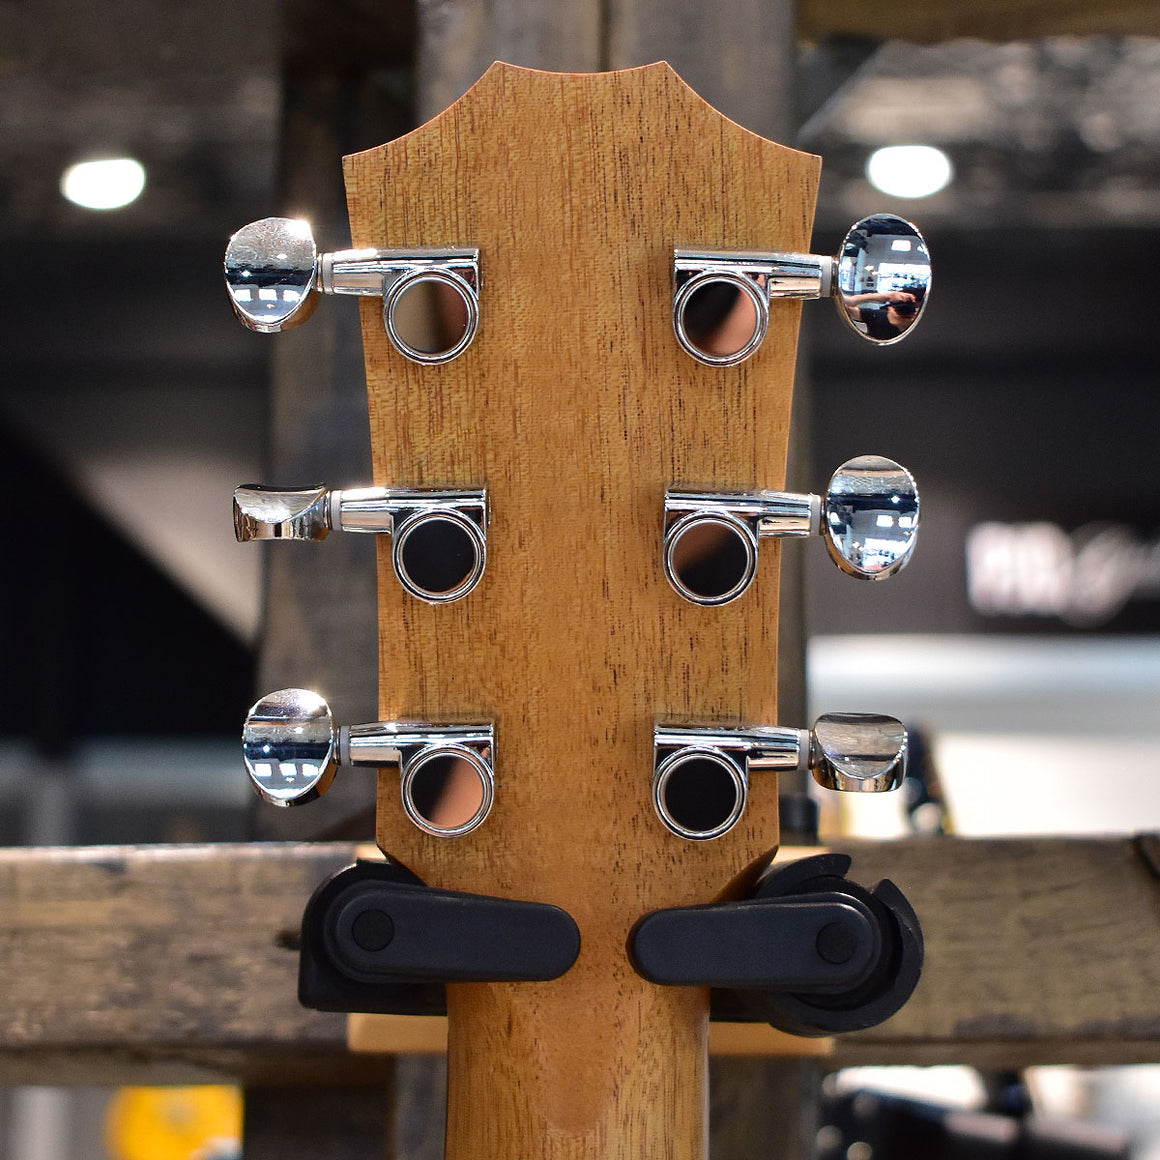 Taylor GS Mini-e Quilted Sapele LTD Electro Acoustic Guitar w/ Gig Bag